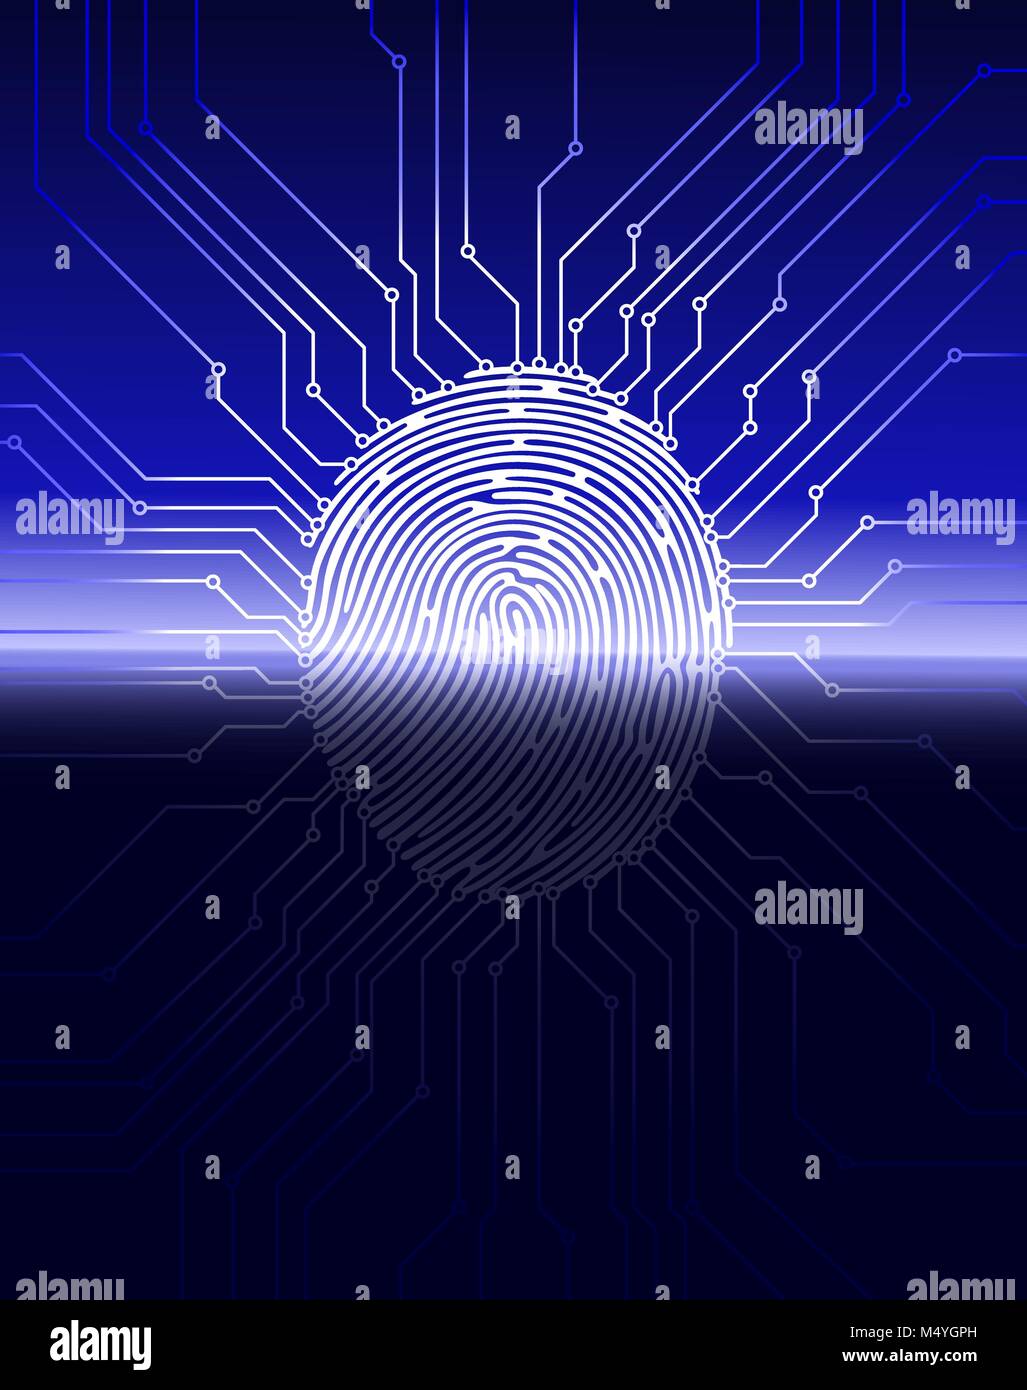 Fingerprint scanning, digital biometric security system, data protection, dark blue background, vector illustration. Stock Vector